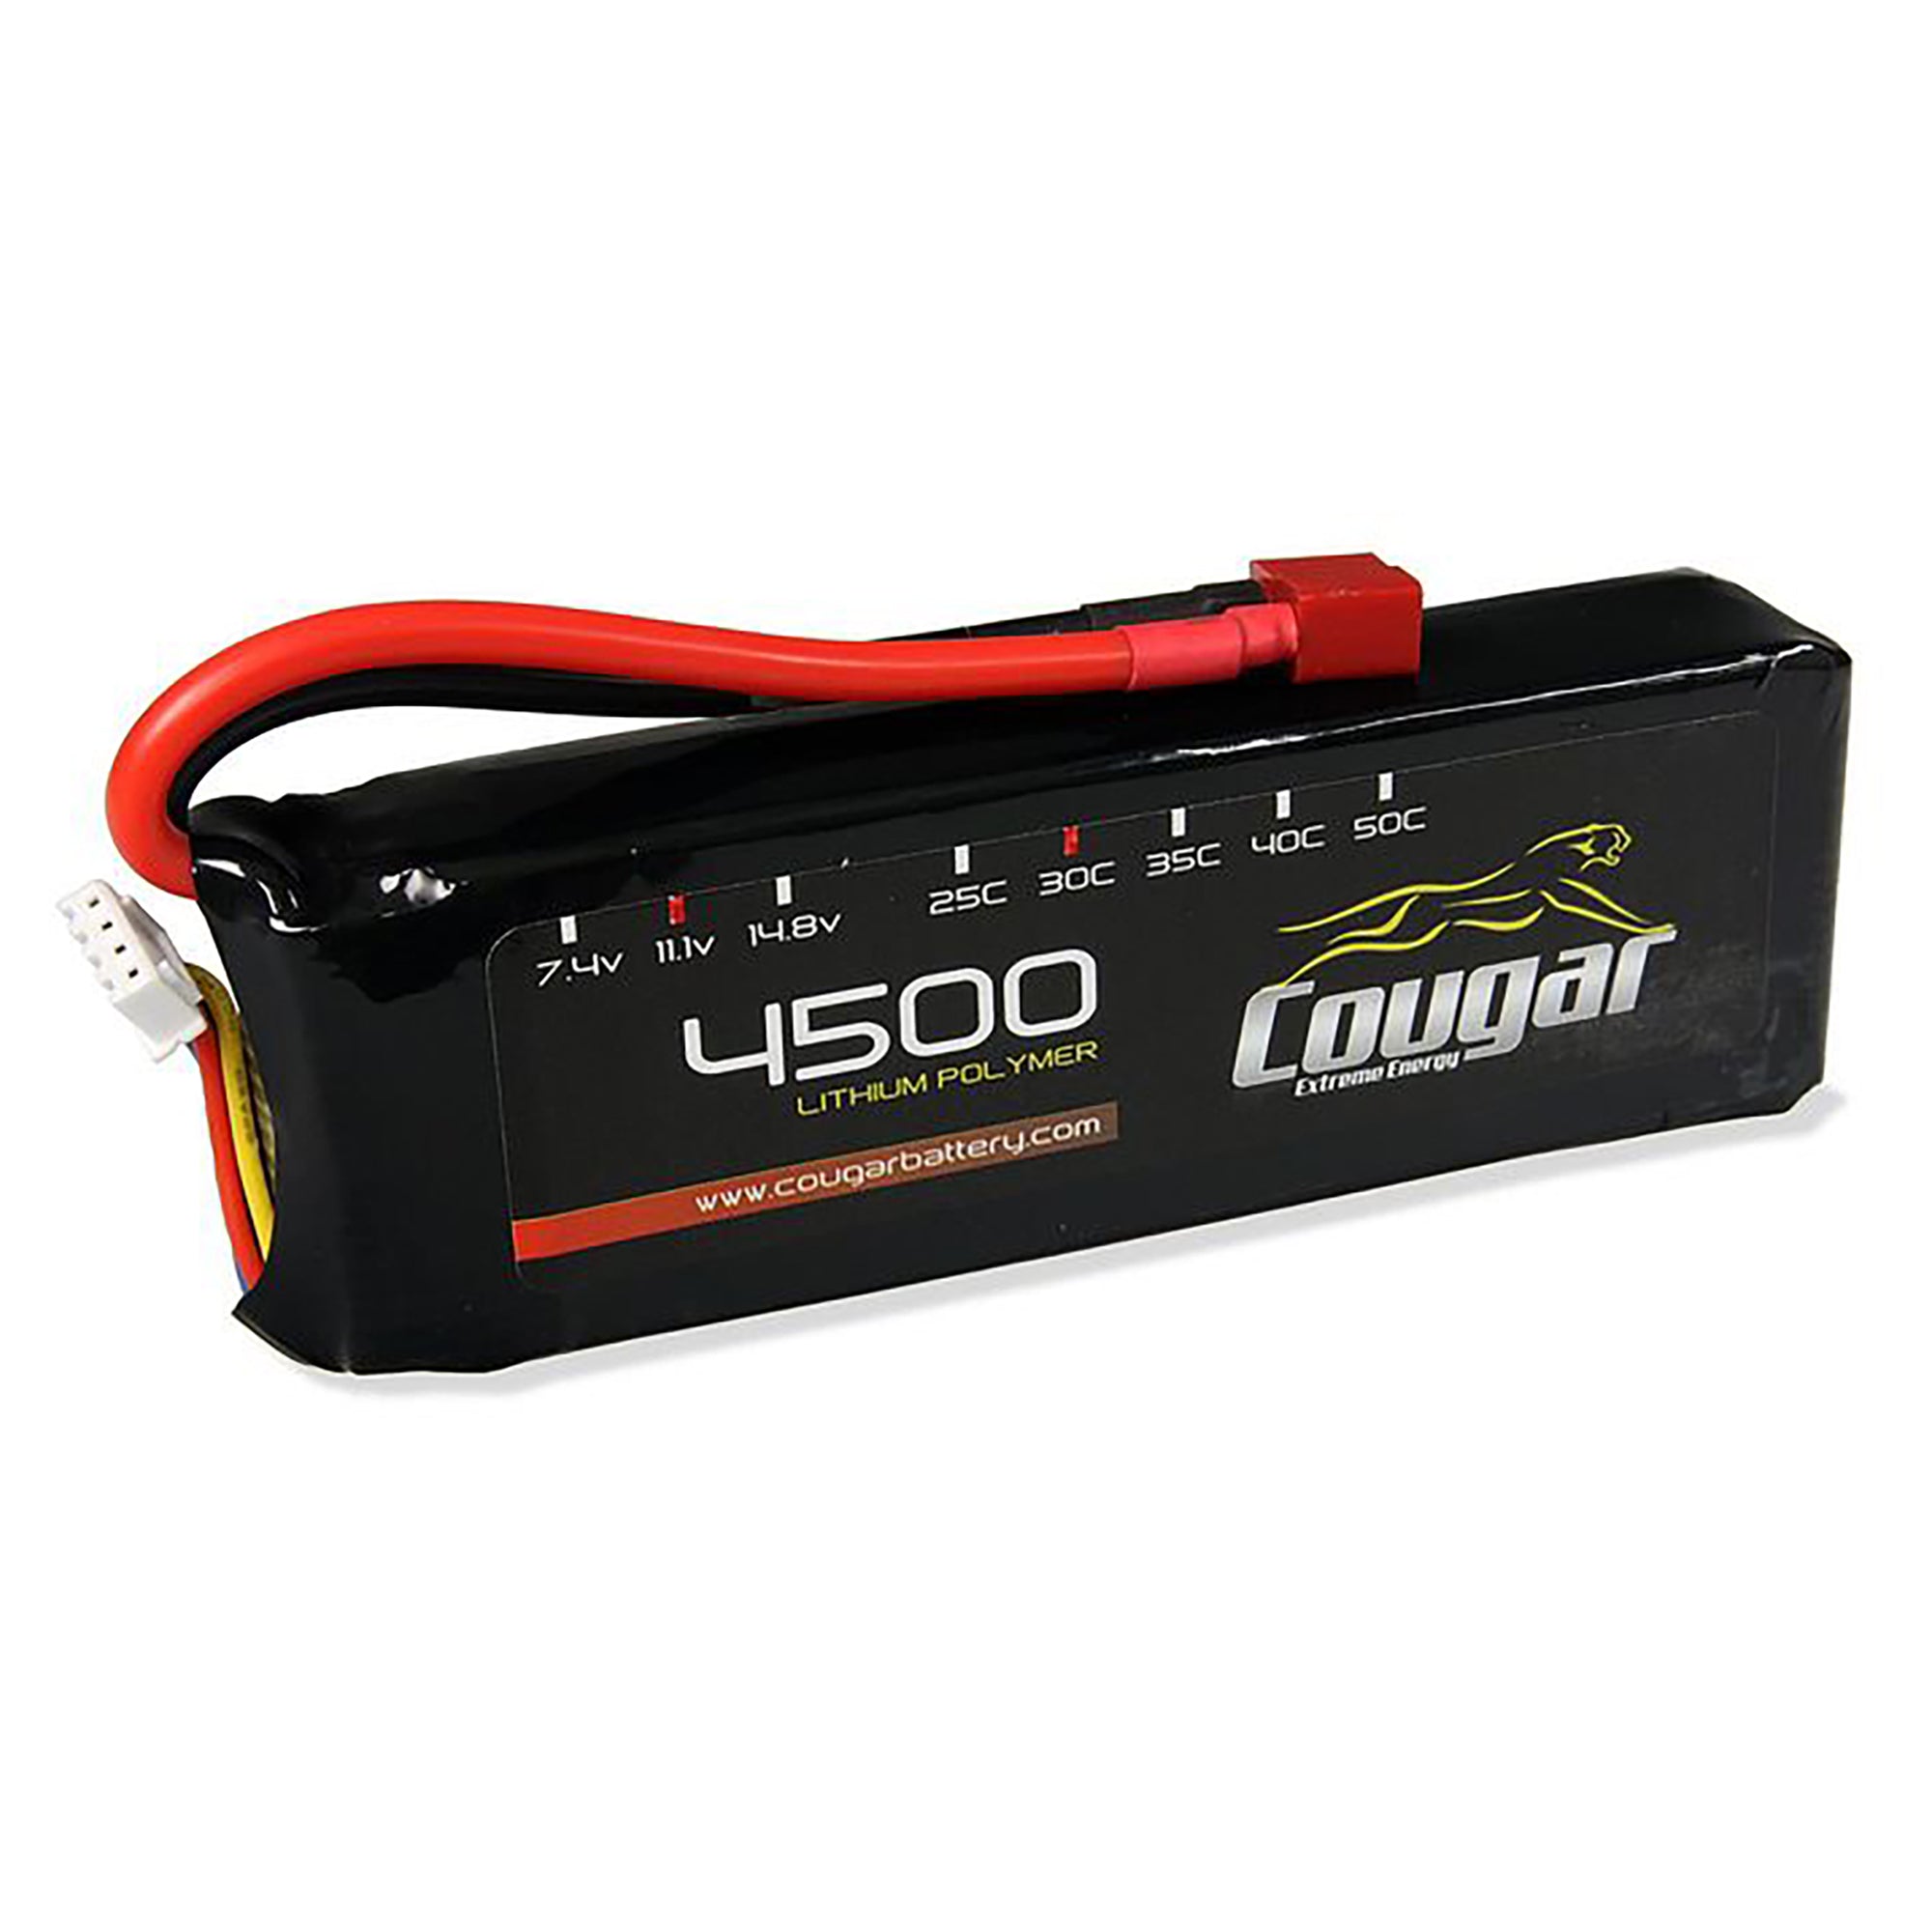 Cougar 4500mAh 11.1v 3S 30C Soft Case LiPo Battery